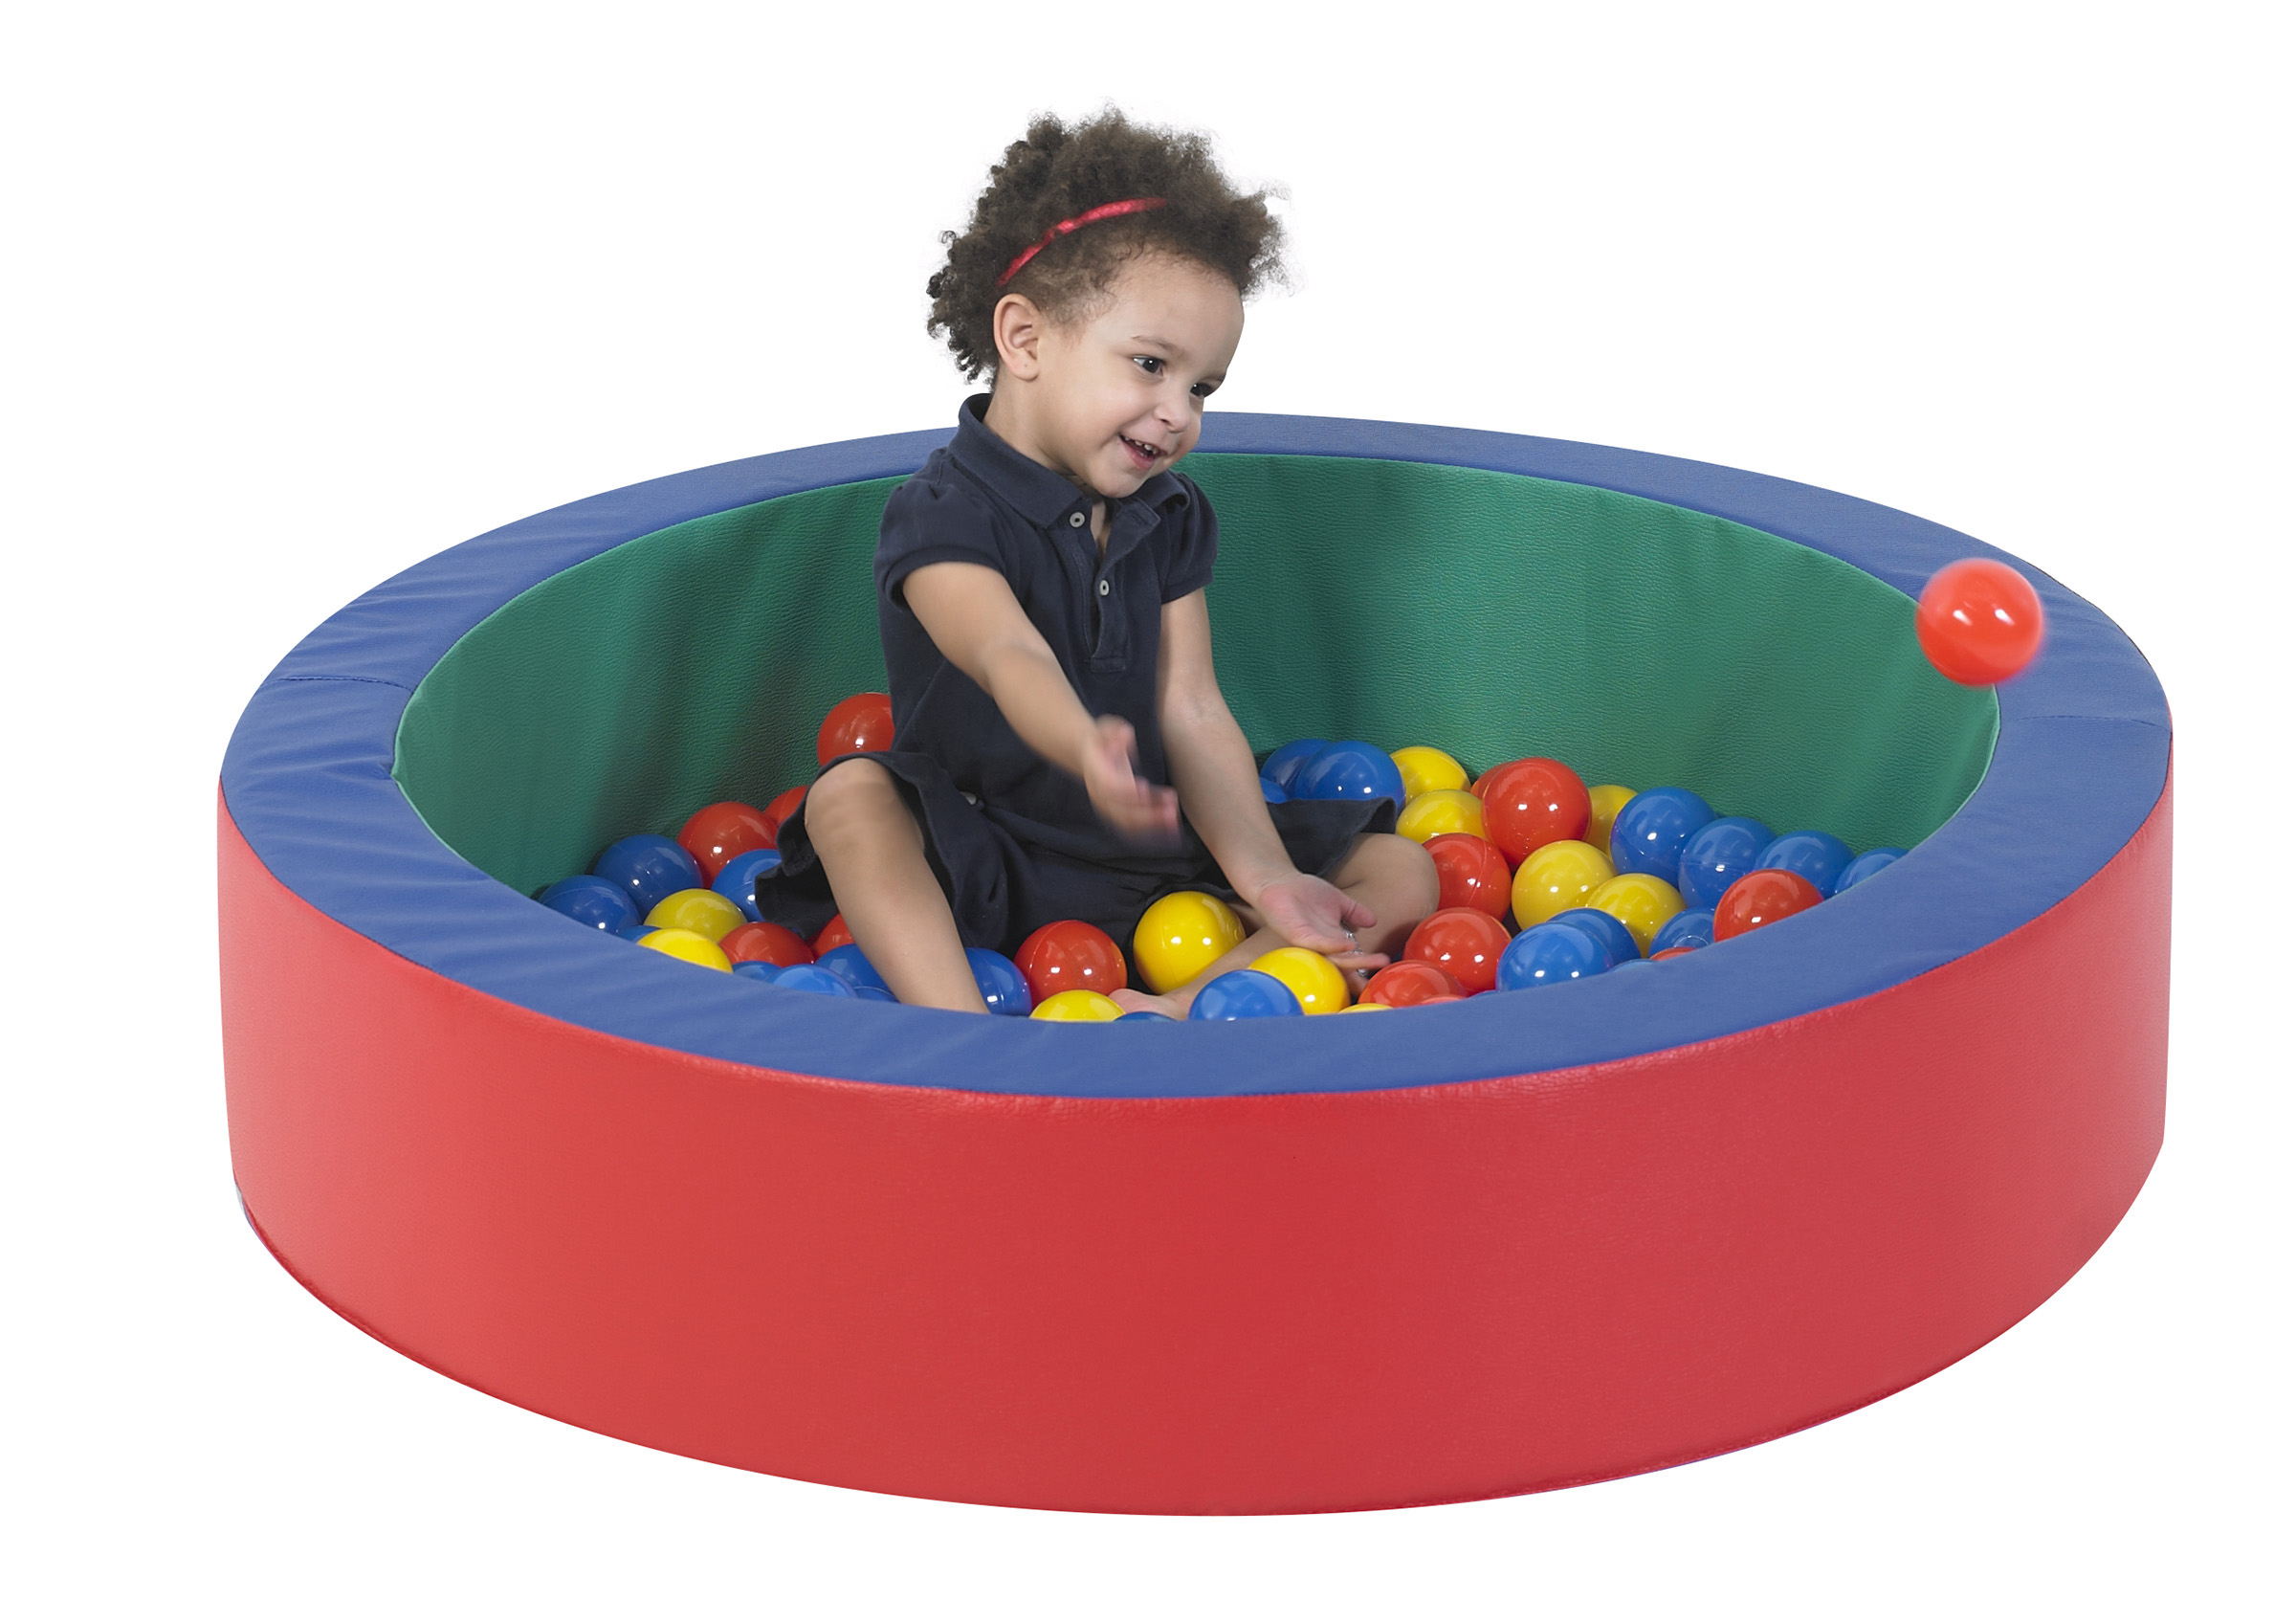 Children Plastic Soft Play Balls For Kids Pits Pen Play Room Pool Bath New 